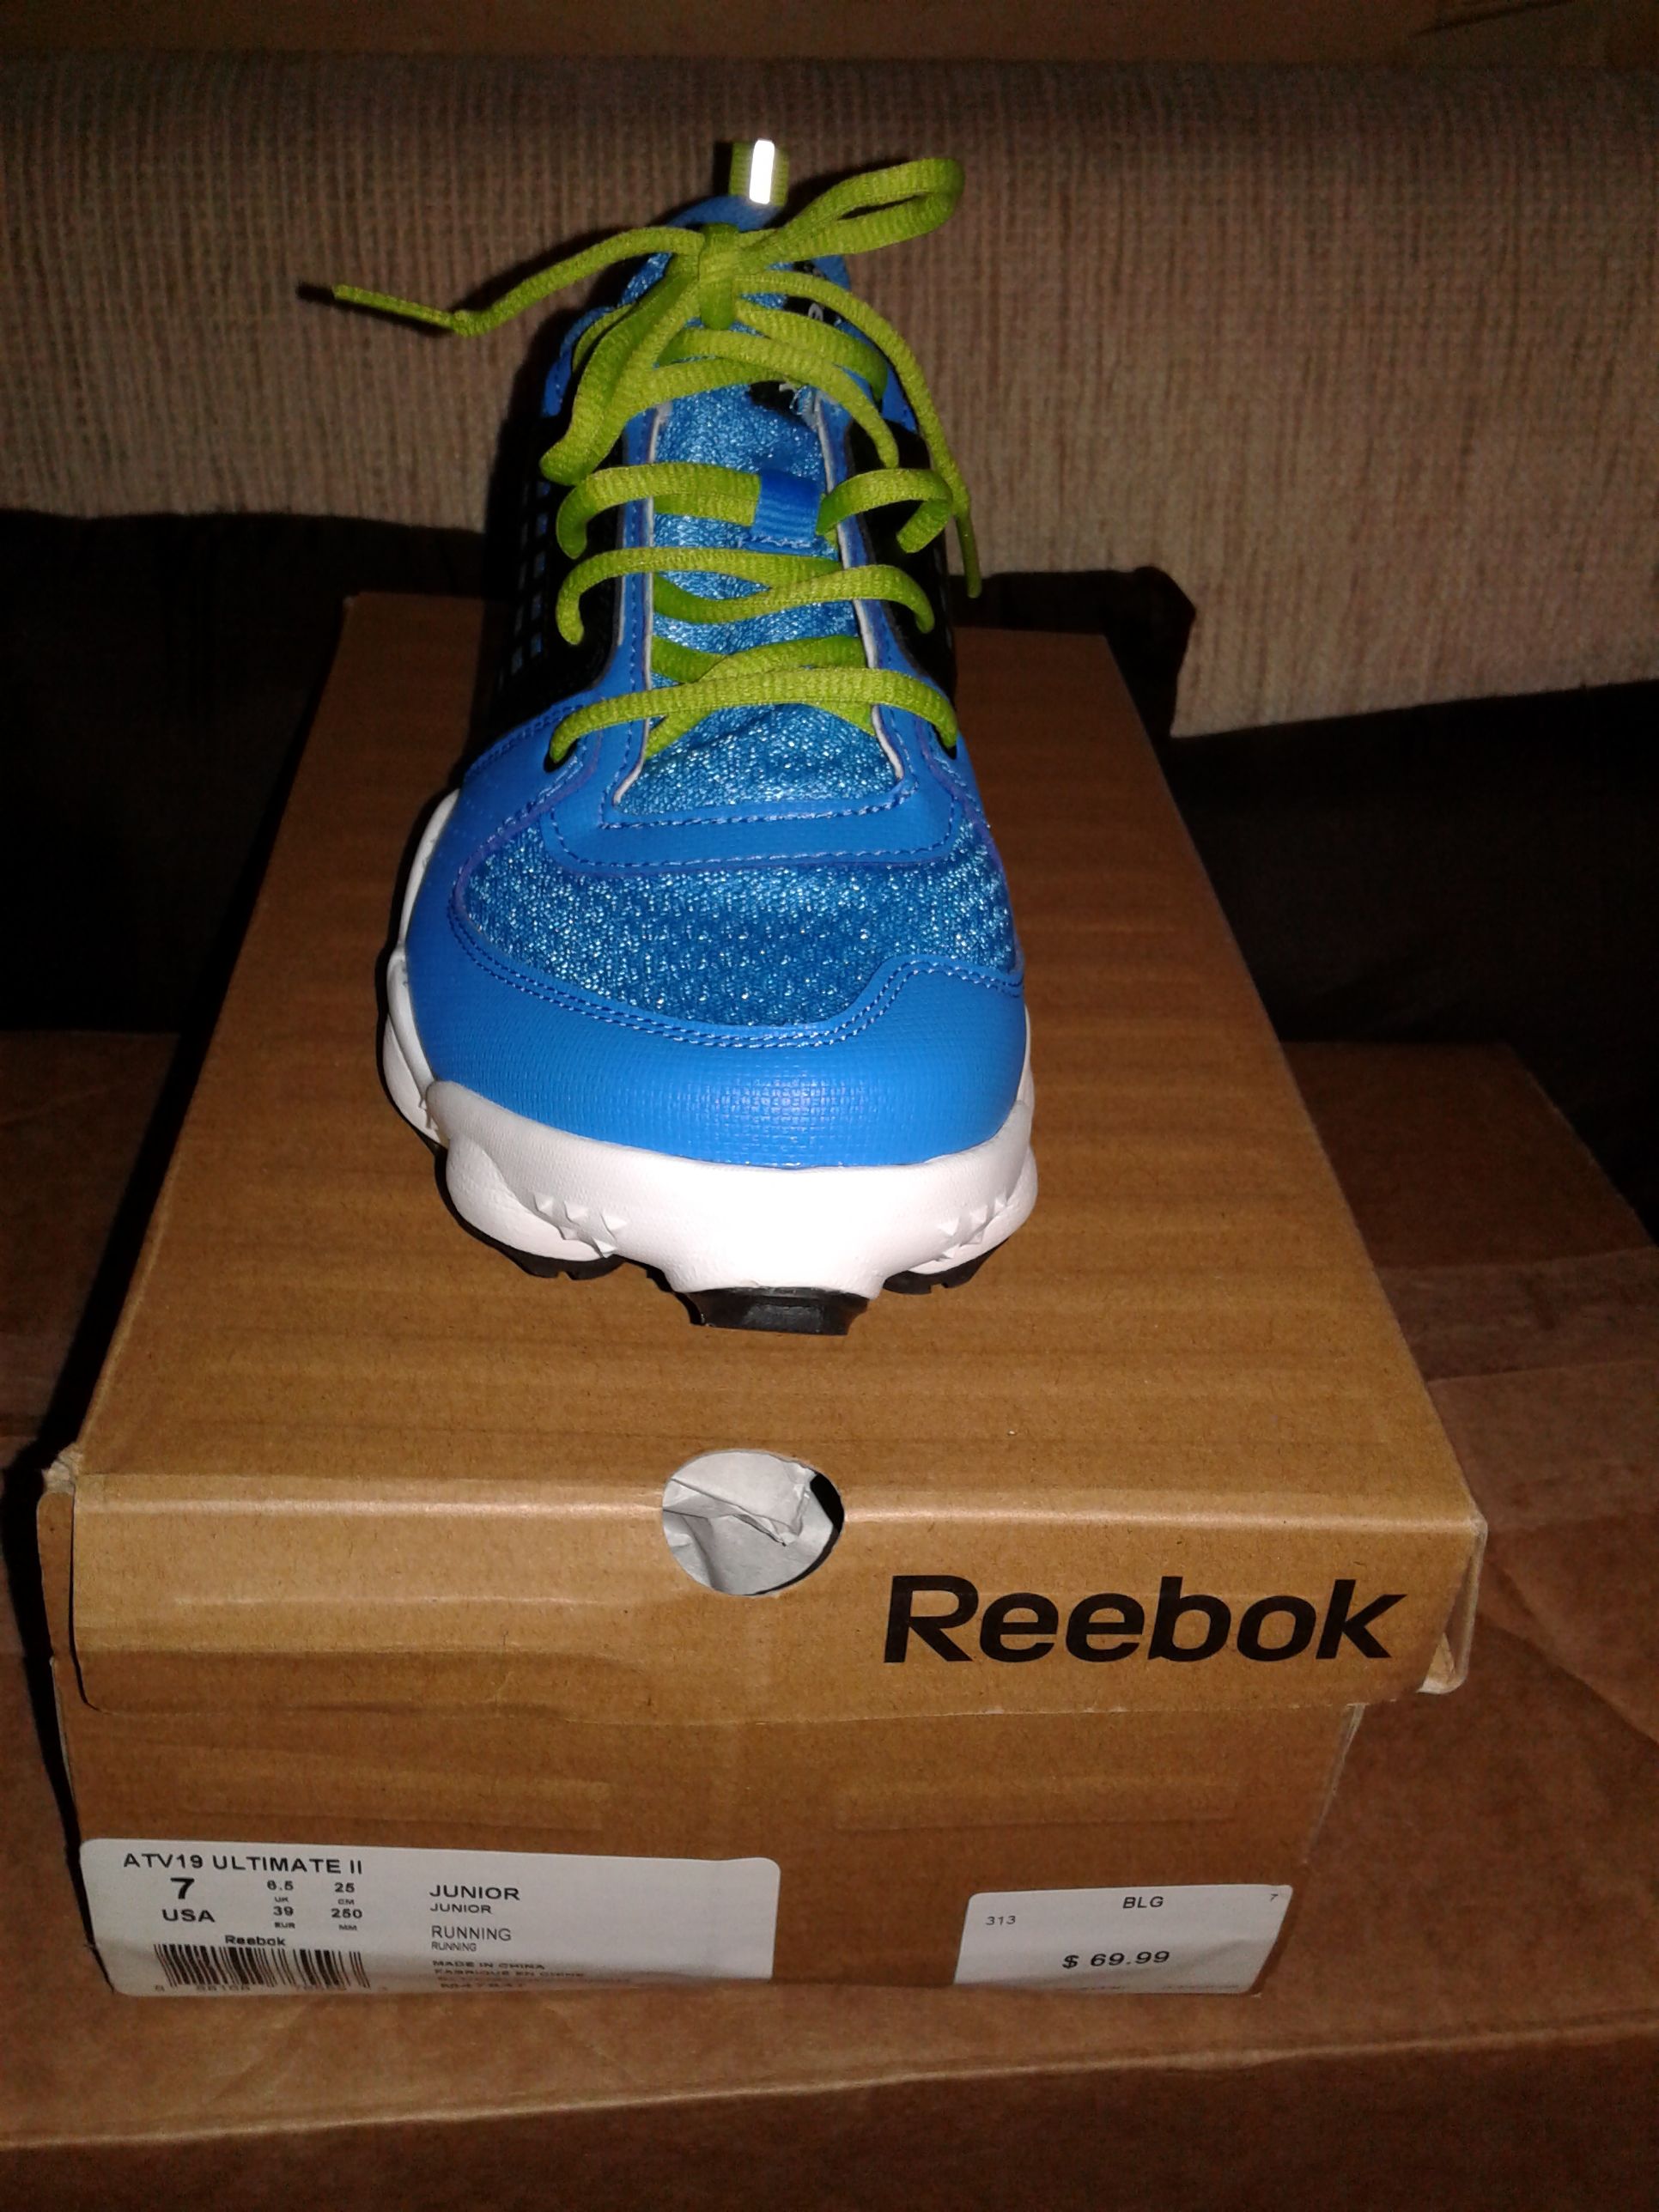 Reebok Tennis Shoes